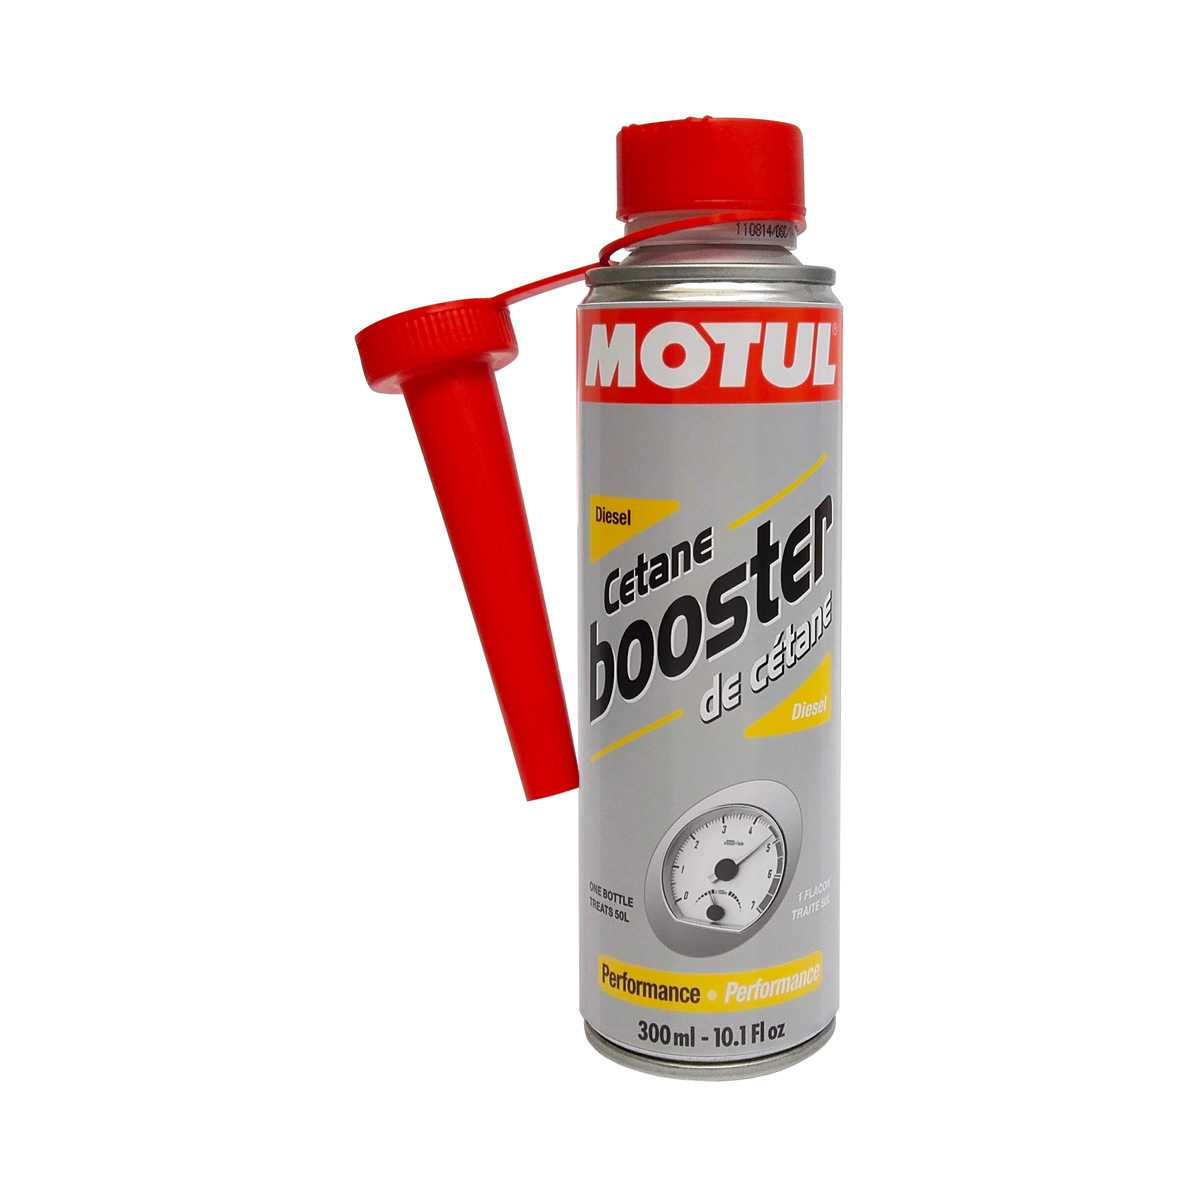 Motul Diesel Cetane Booster (300 mL)